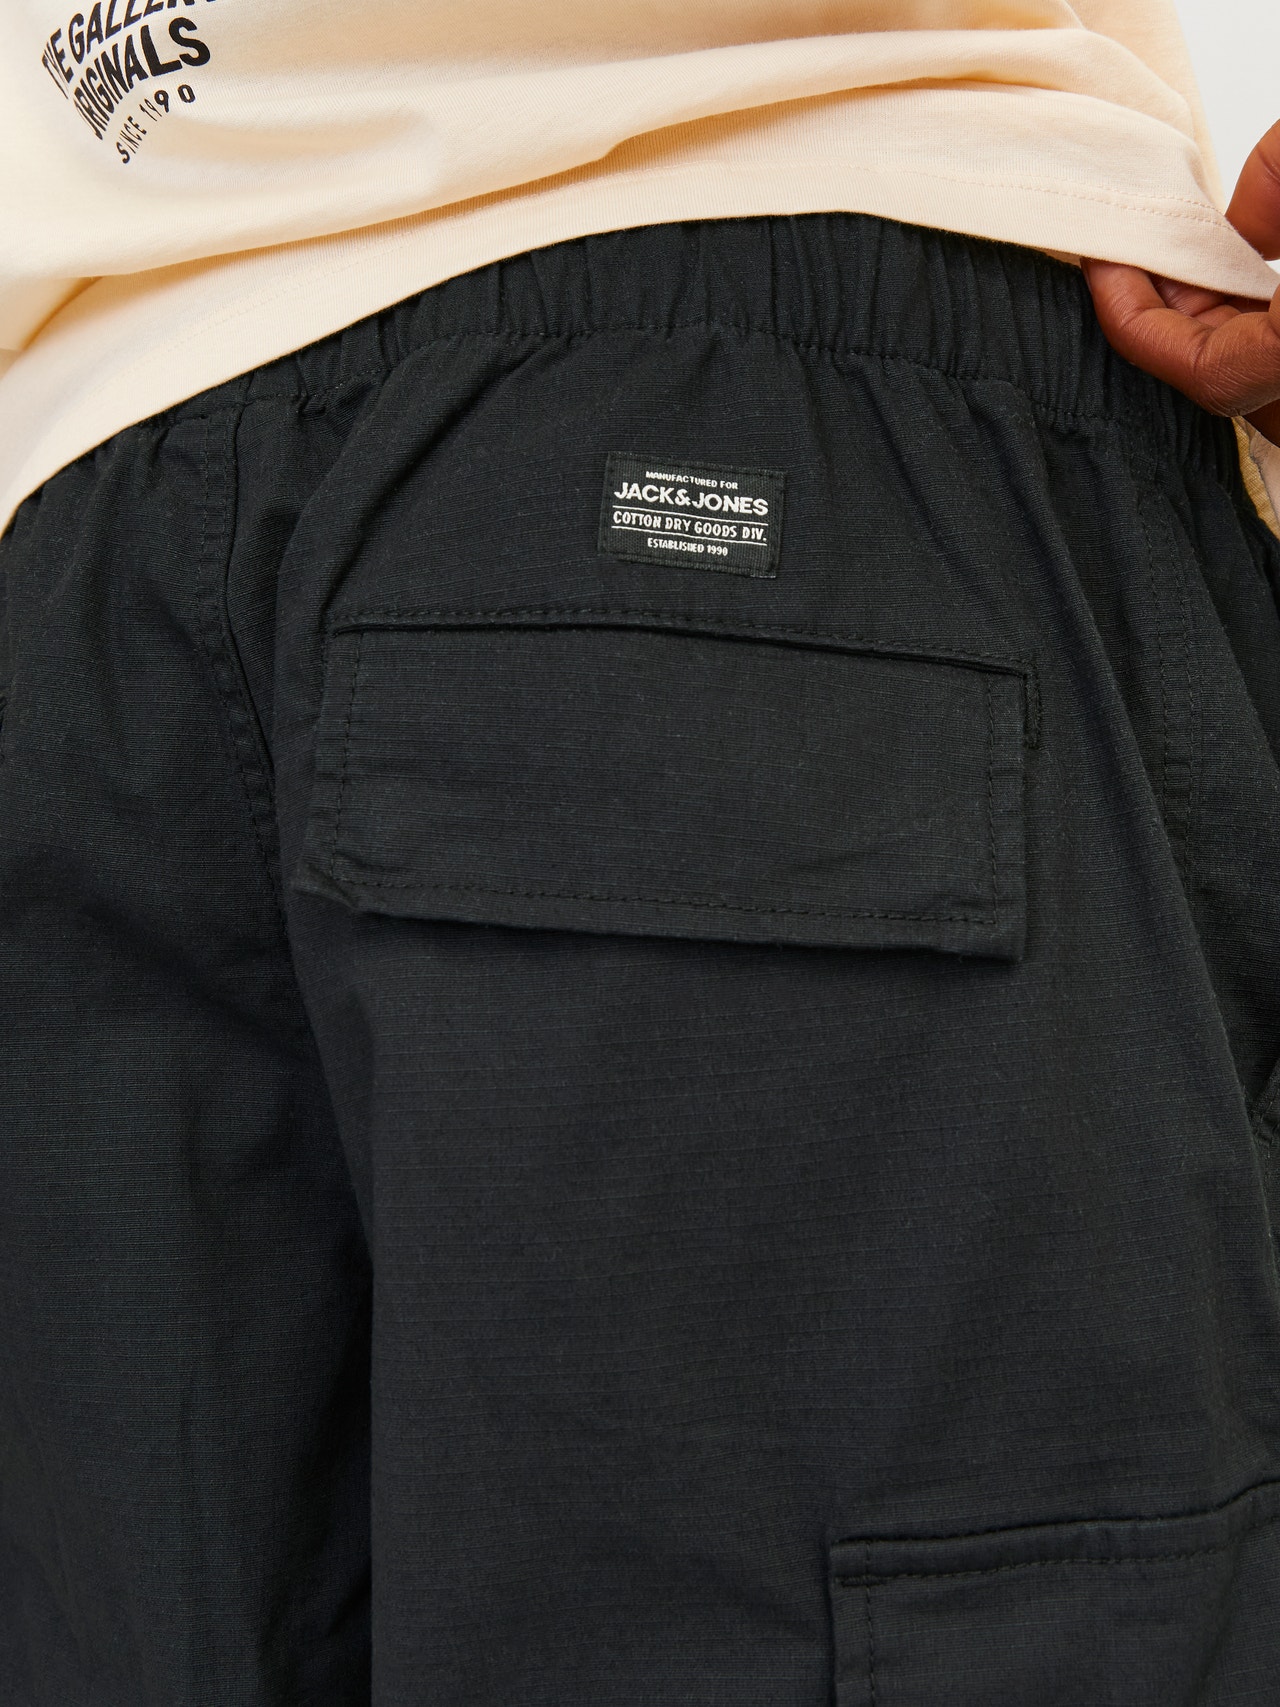 Jack & Jones Balloon Fit Cargo shorts -Black - 12254398